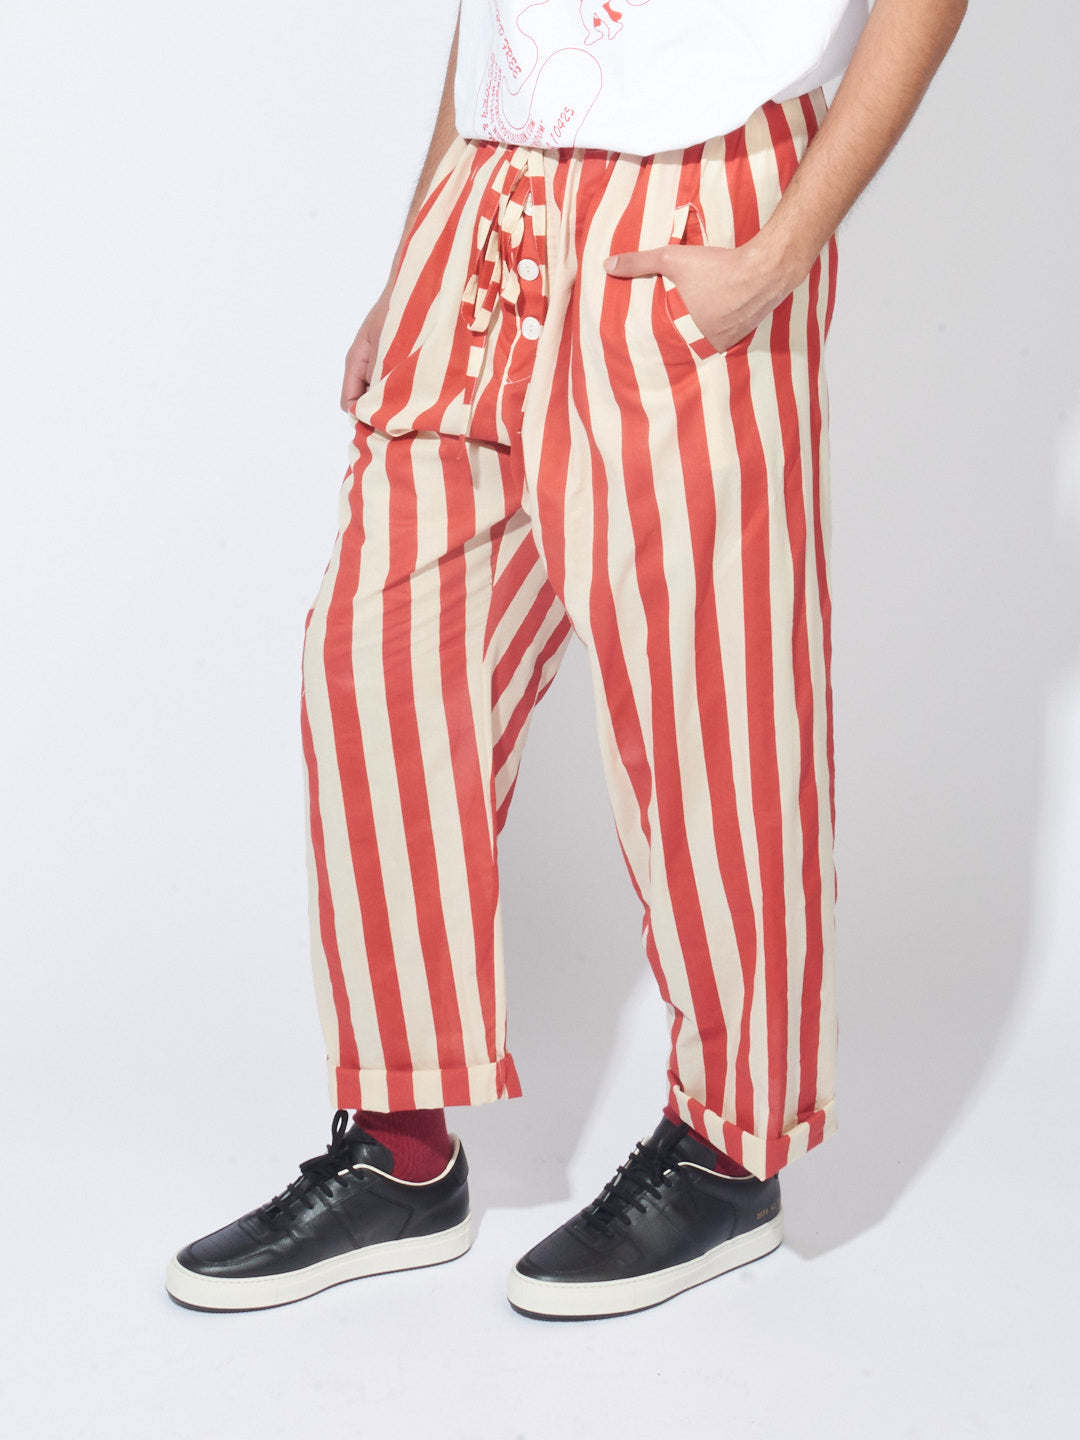 Striped Pants Red And White Hotsell  dainikhitnewscom 1692269719